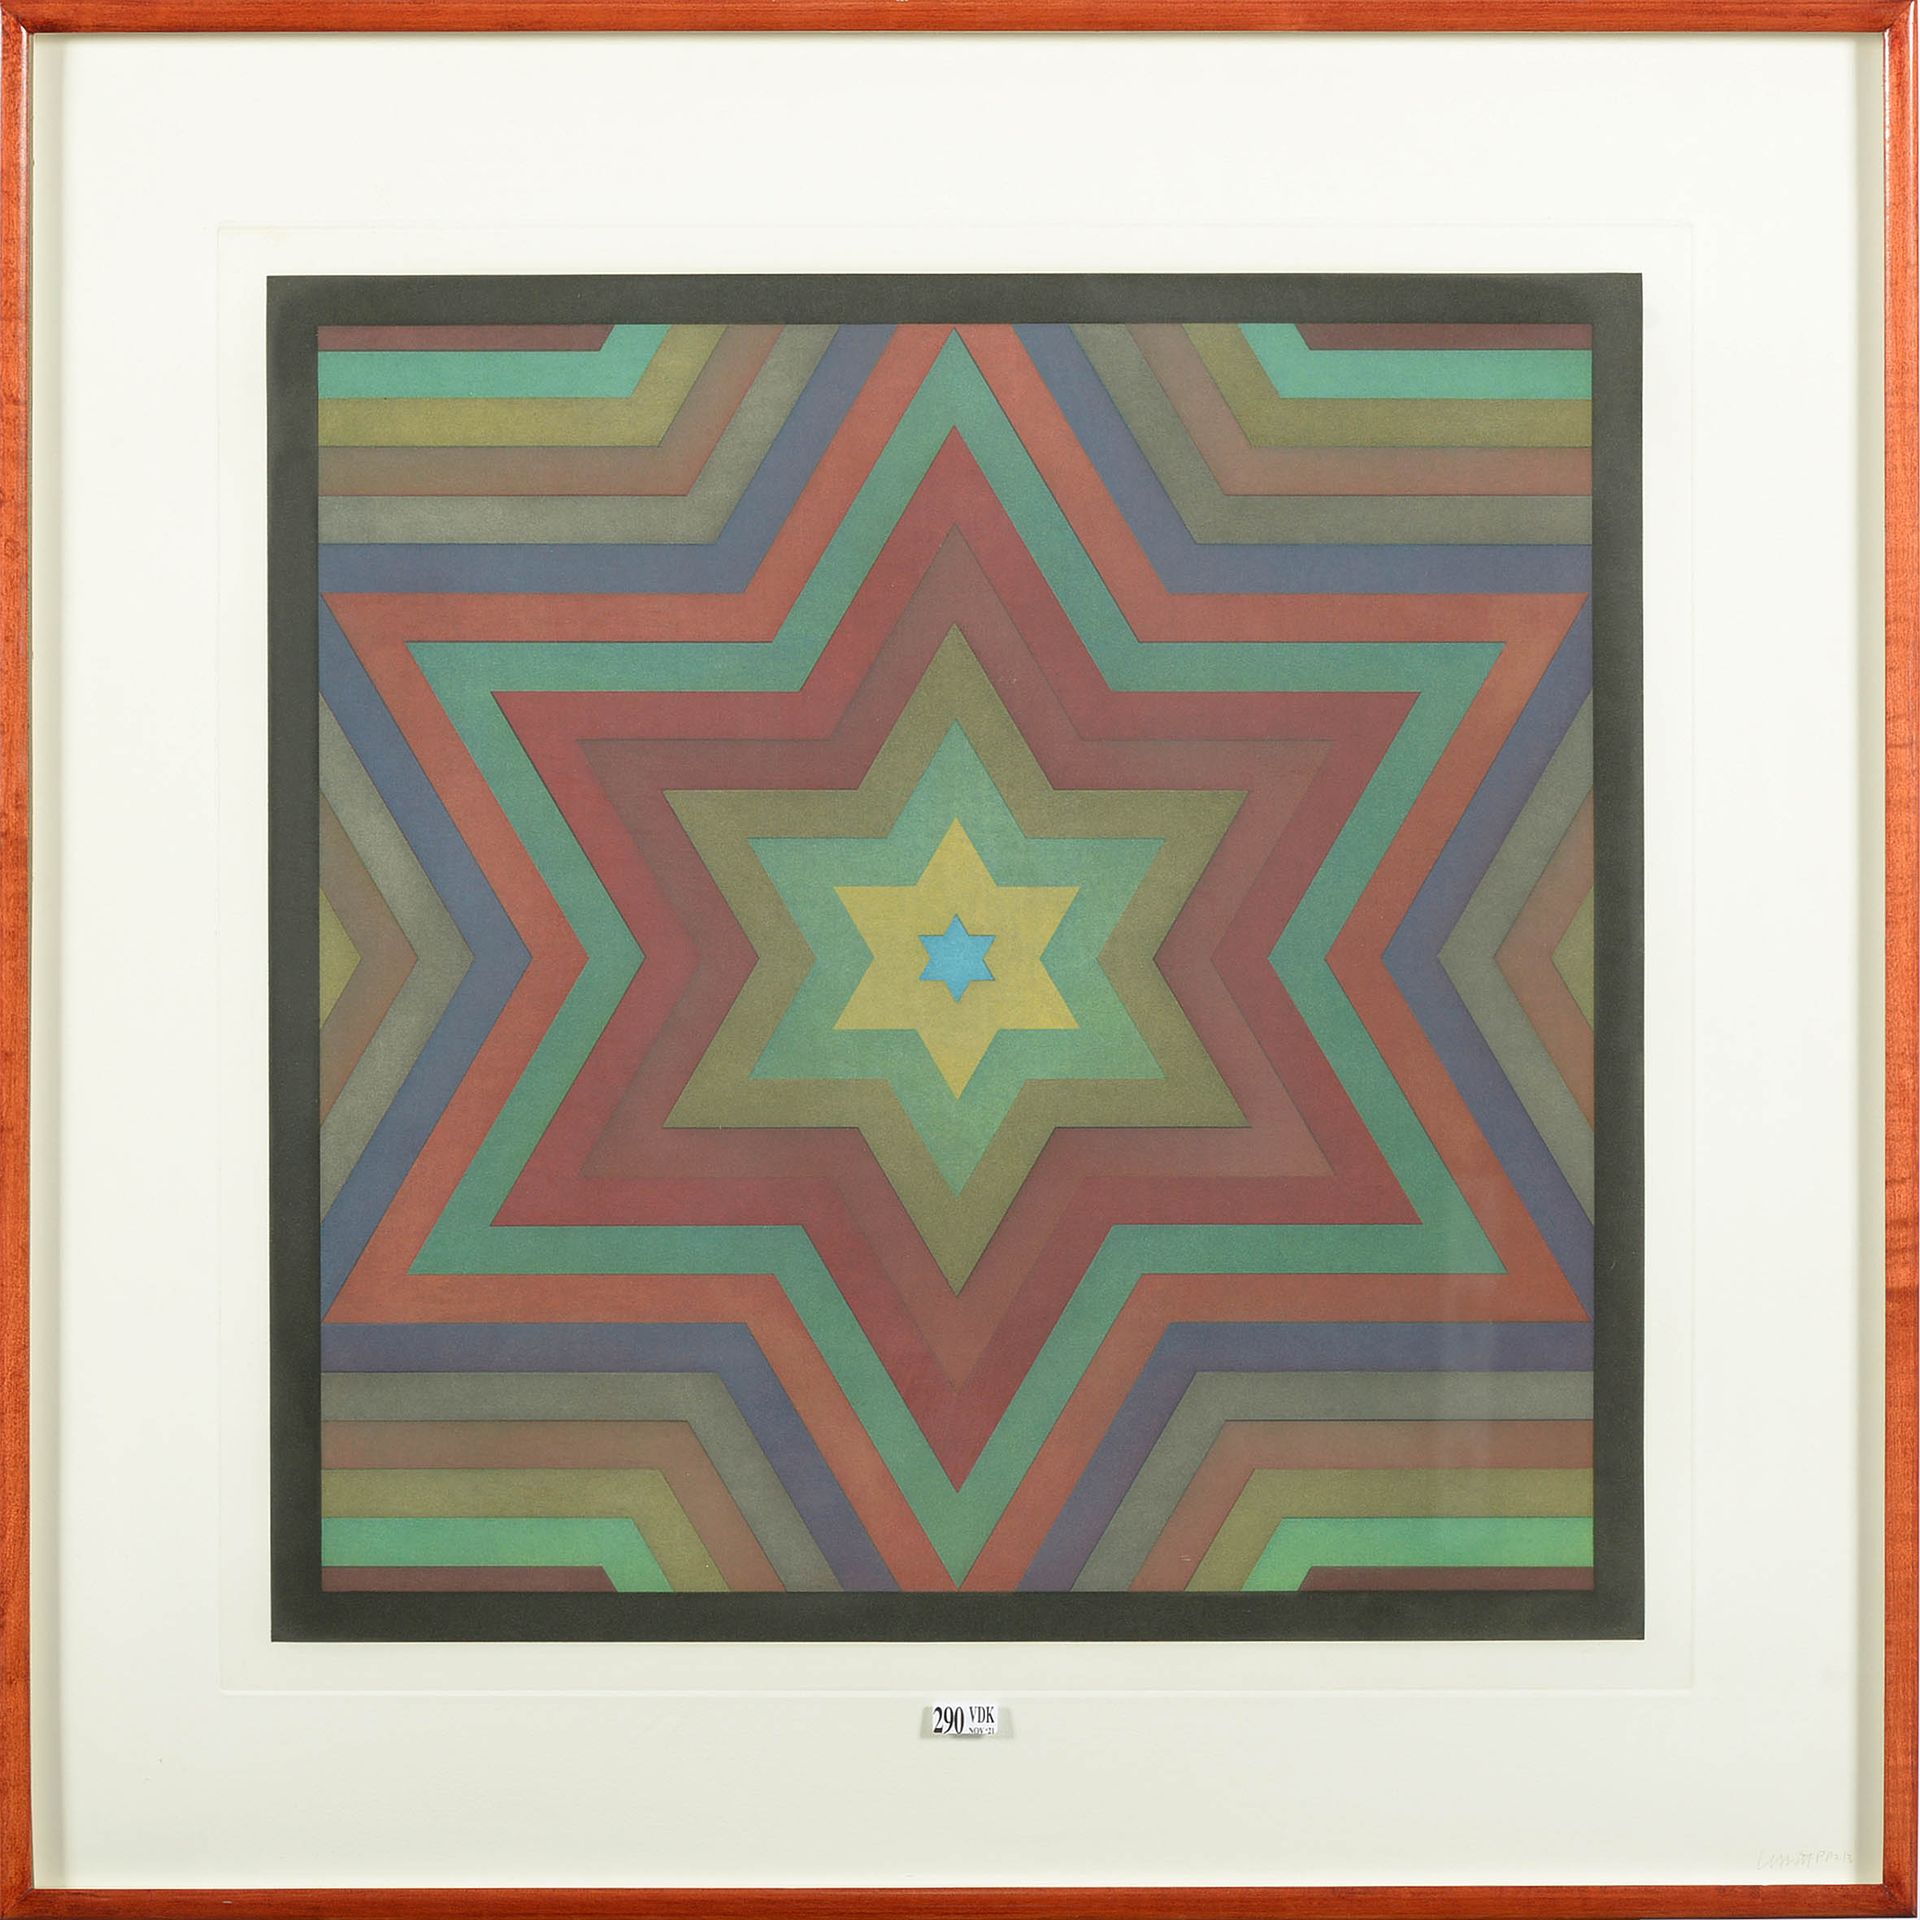 LEWITT Sol (1928 - 2007) "Estrellas" aguatinta en colores sobre papel. Firmado a&hellip;